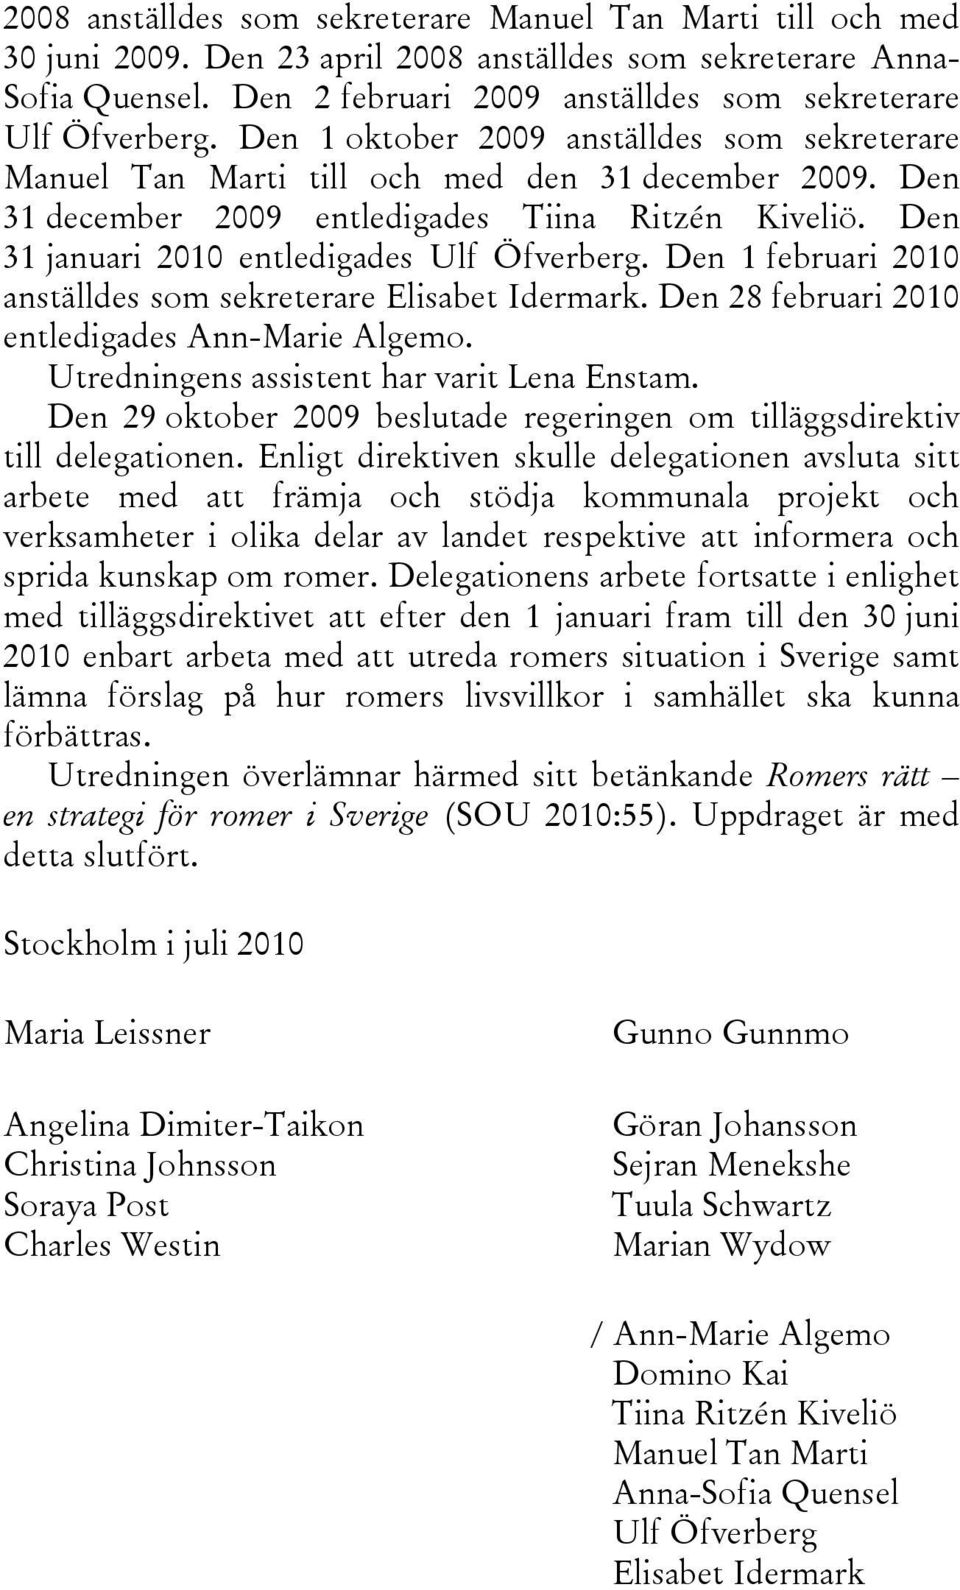 Den 31 december 2009 entledigades Tiina Ritzén Kiveliö. Den 31 januari 2010 entledigades Ulf Öfverberg. Den 1 februari 2010 anställdes som sekreterare Elisabet Idermark.